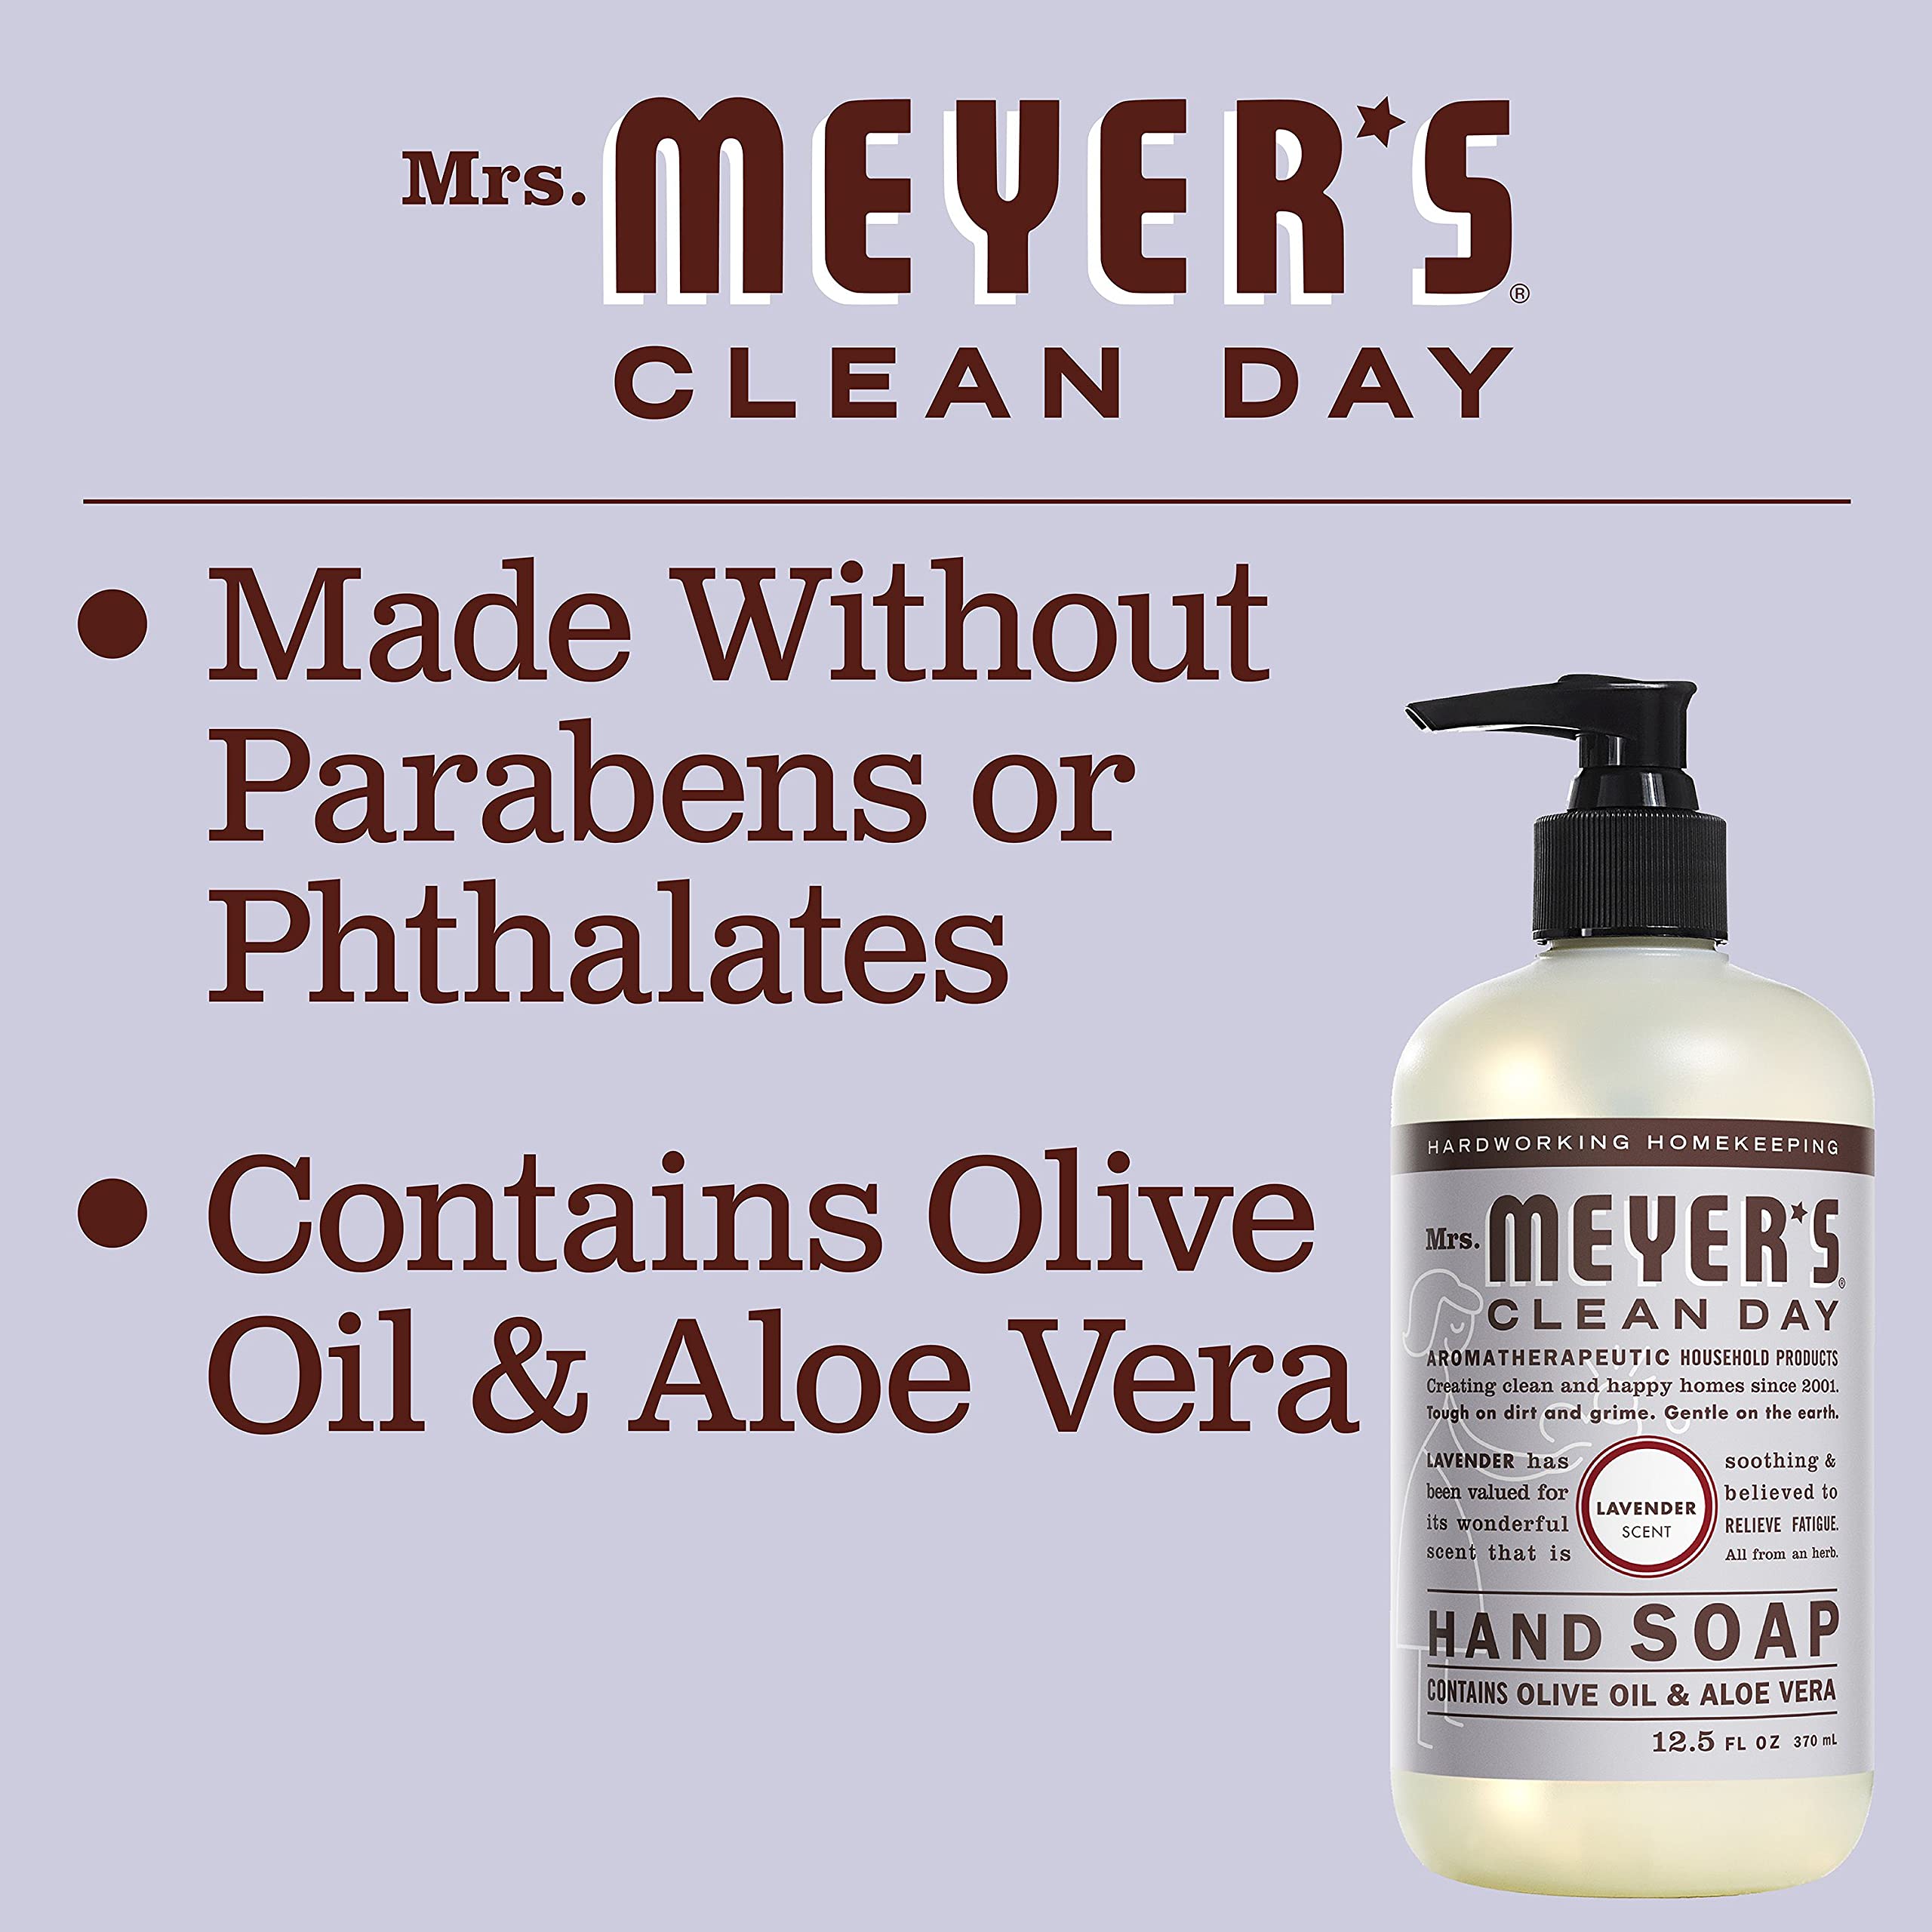 Mrs. Meyer's Hand Soap Refill, Made with Essential Oils, Biodegradable Formula, Lavender, 33 fl. oz